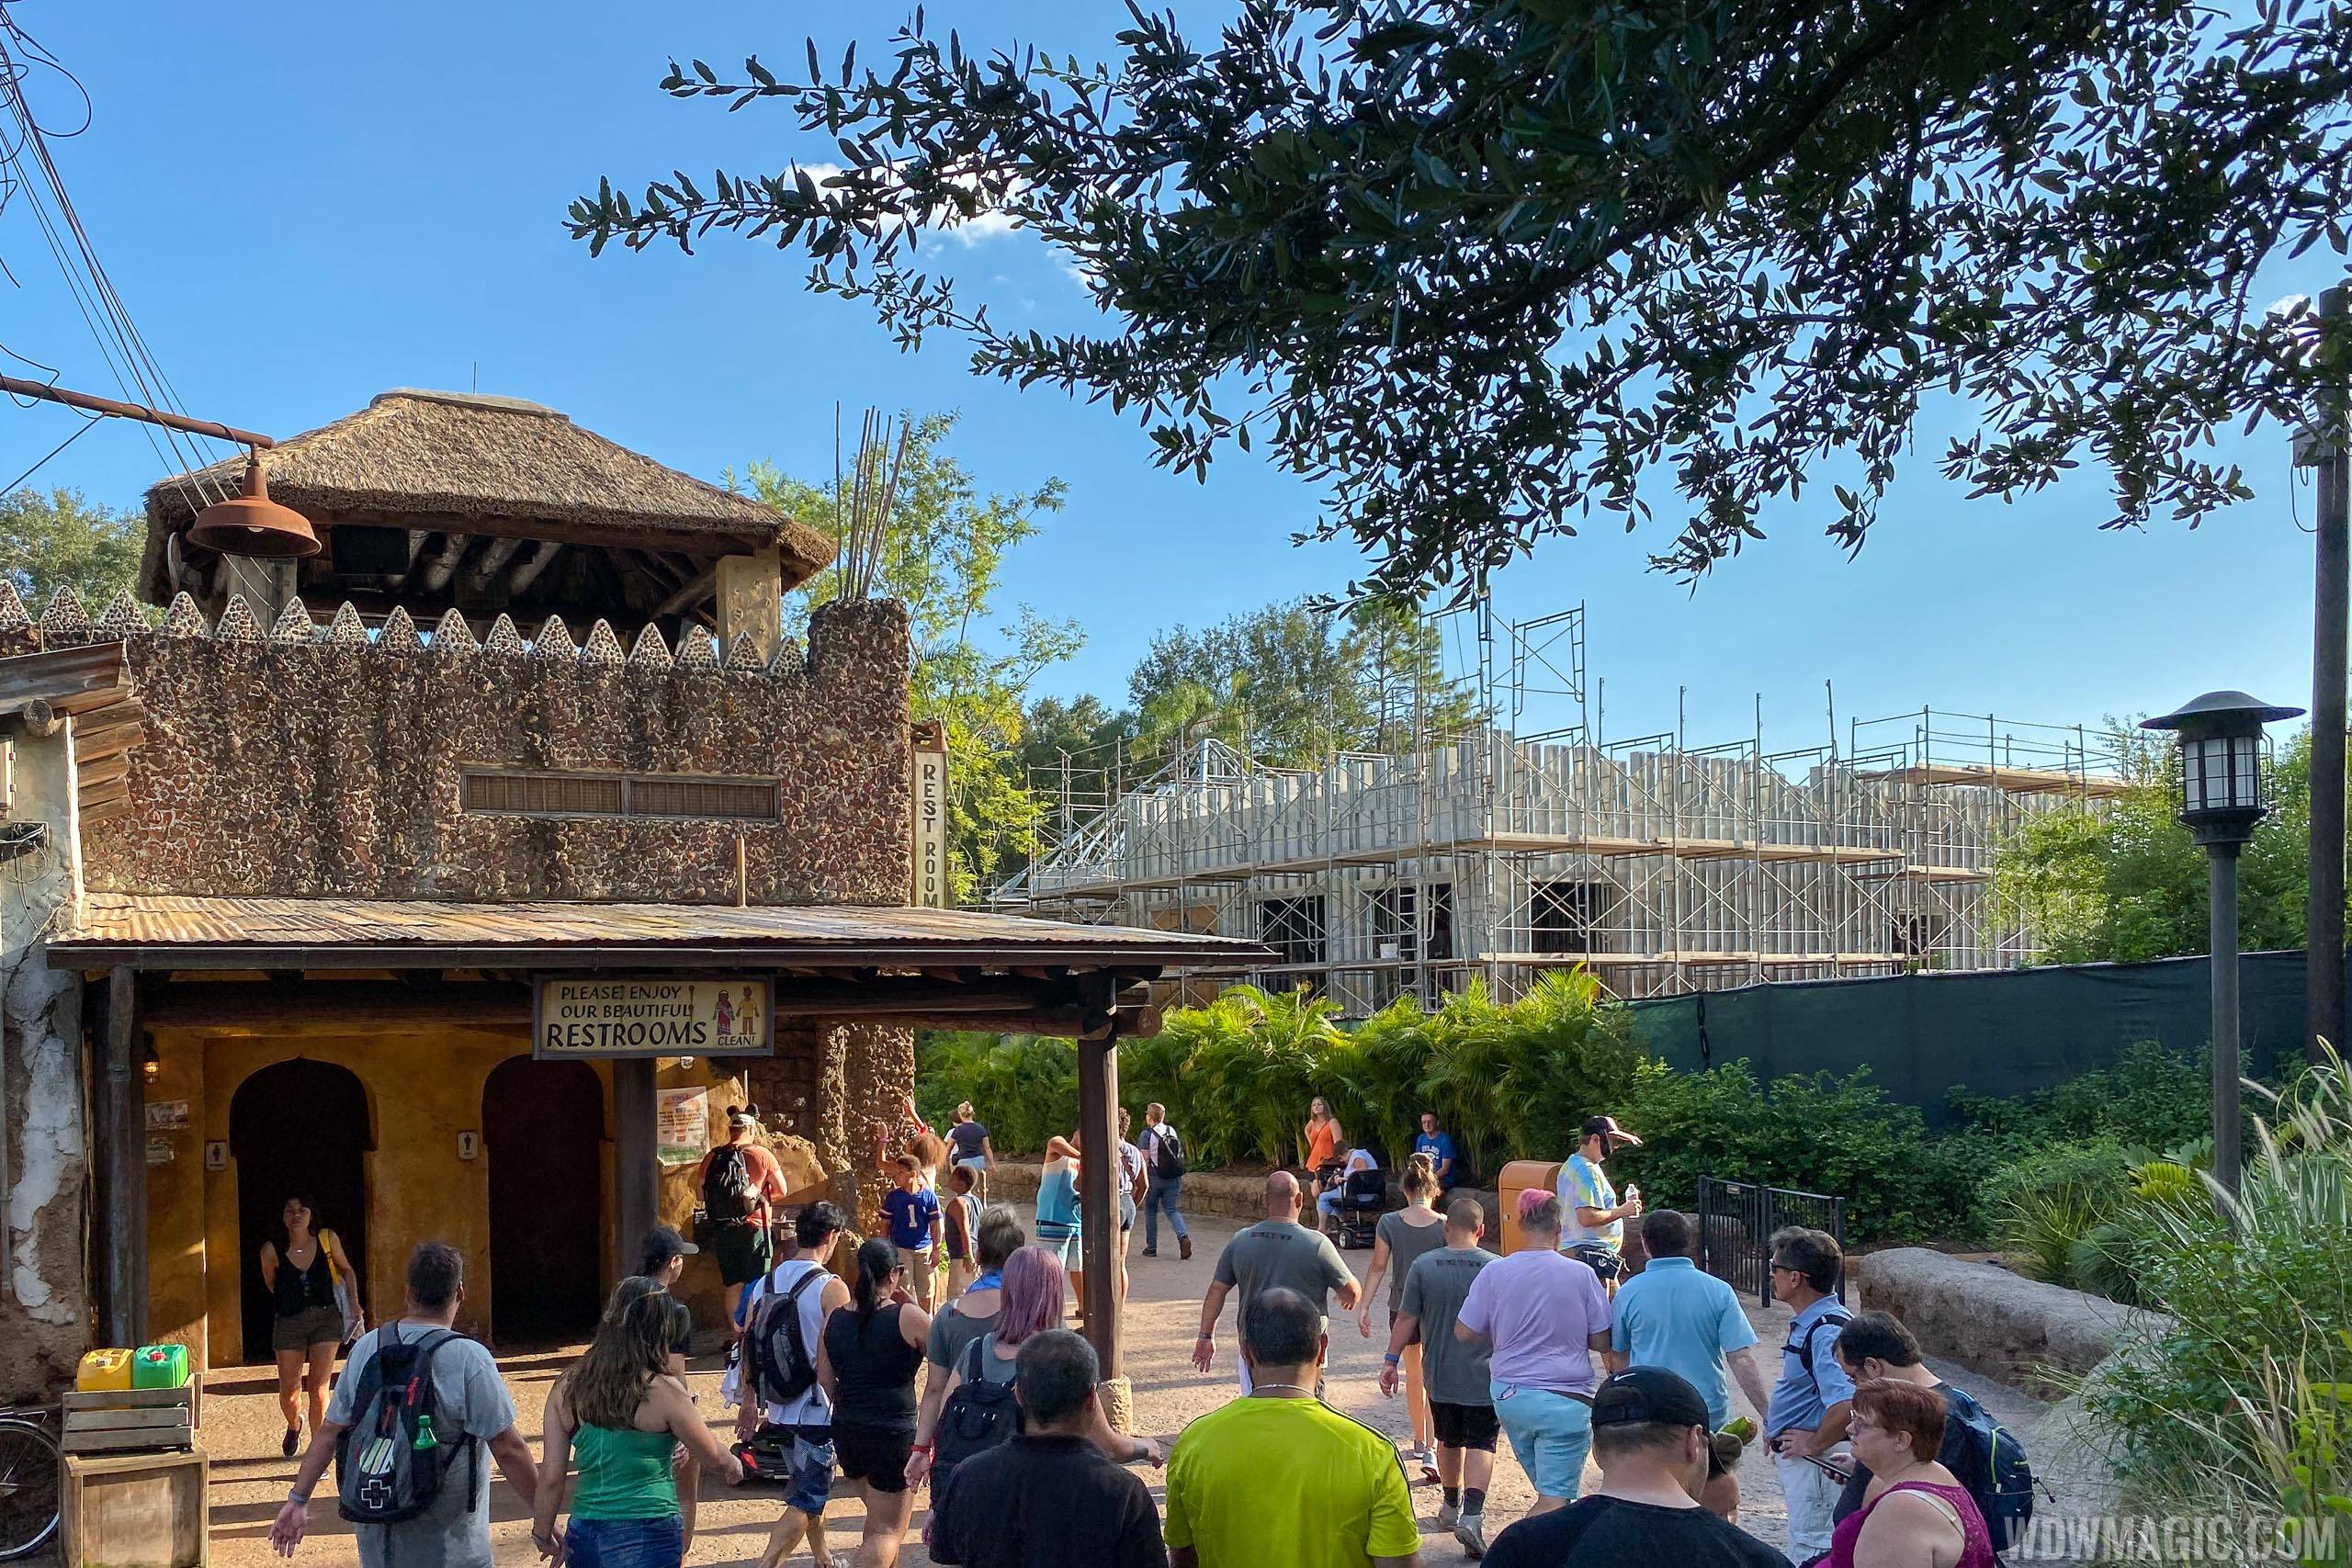 Club 33 Lounge construction at Disney's Animal Kingdom - September 2019